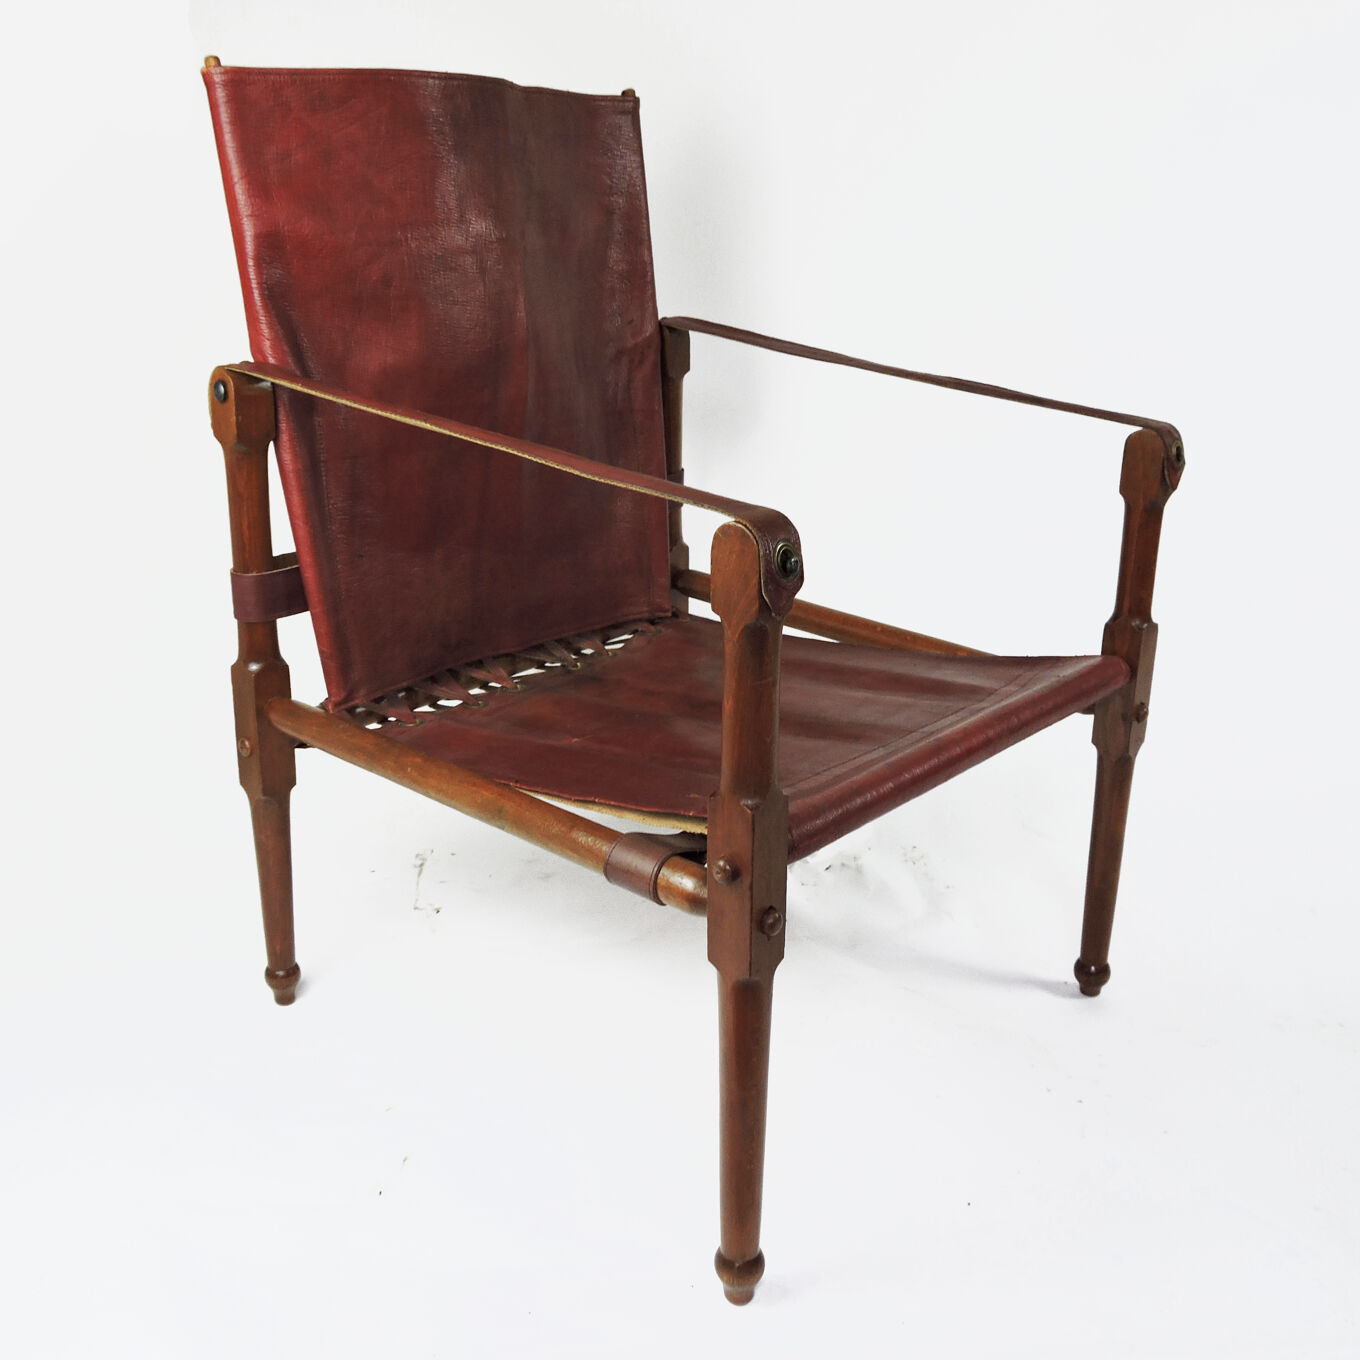 1930's safari chair